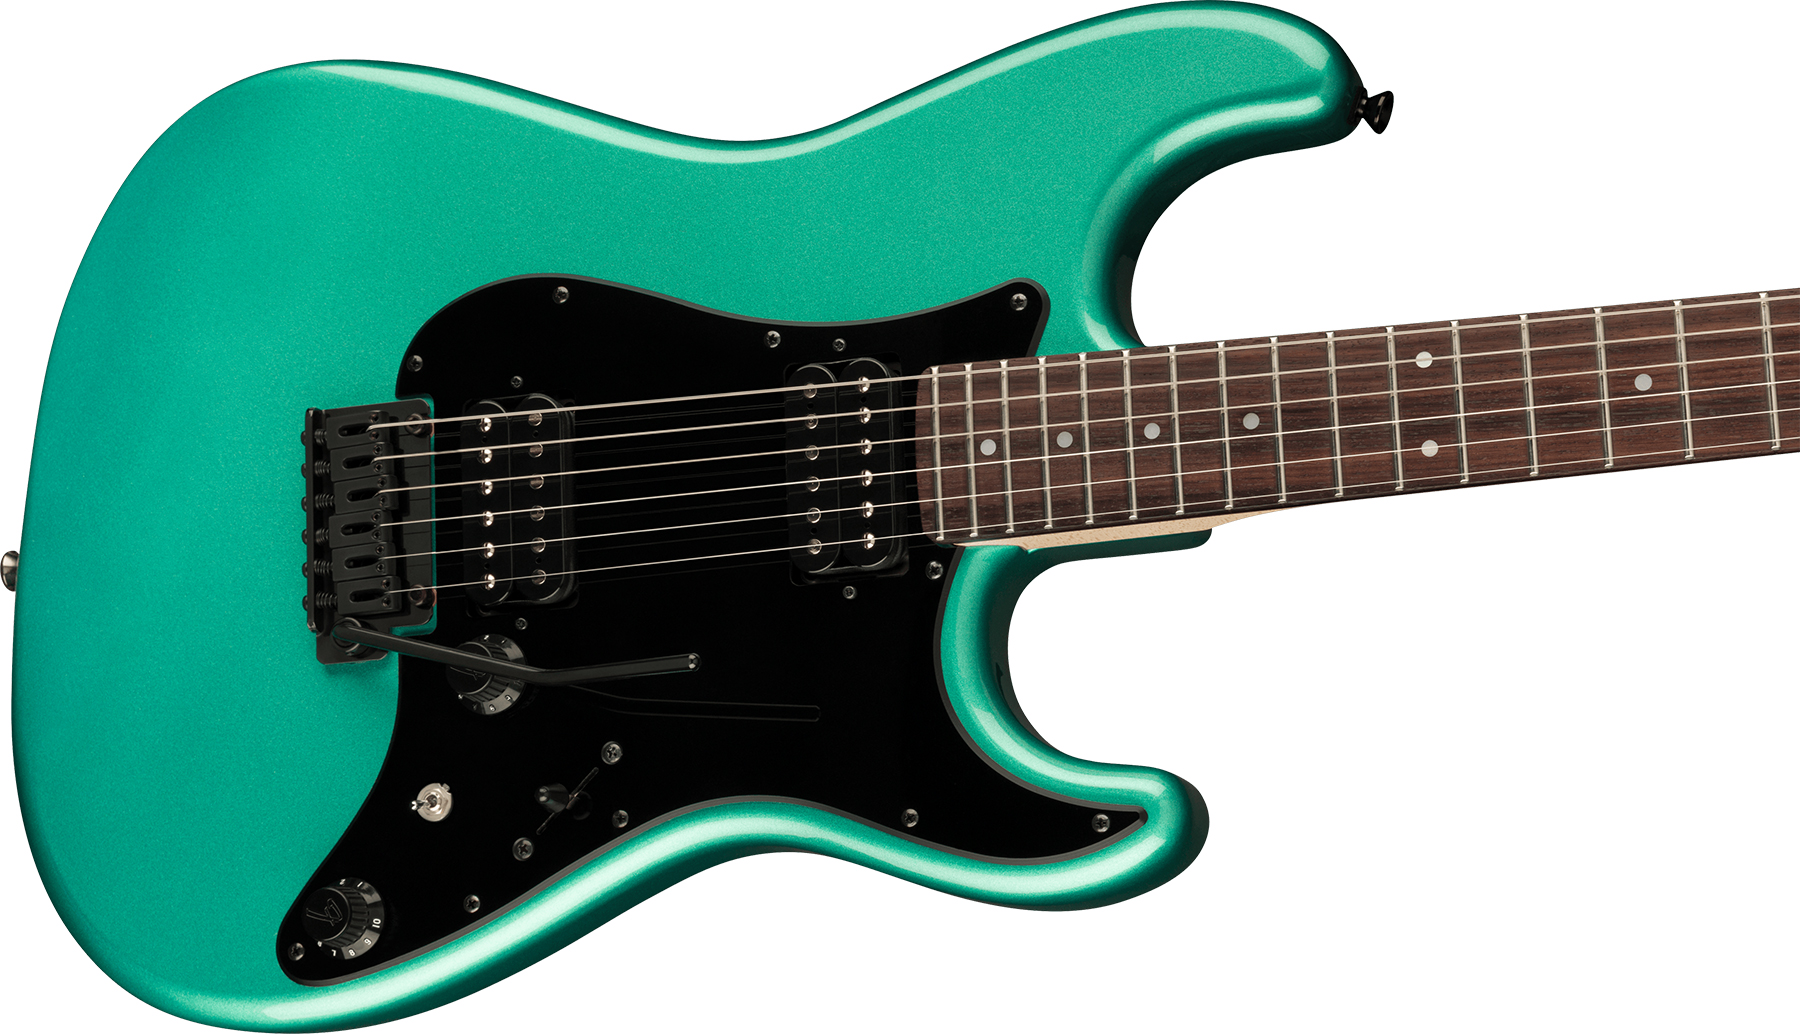 Fender Strat Boxer Hh Jap Trem Rw +housse - Sherwood Green Metallic - Str shape electric guitar - Variation 2